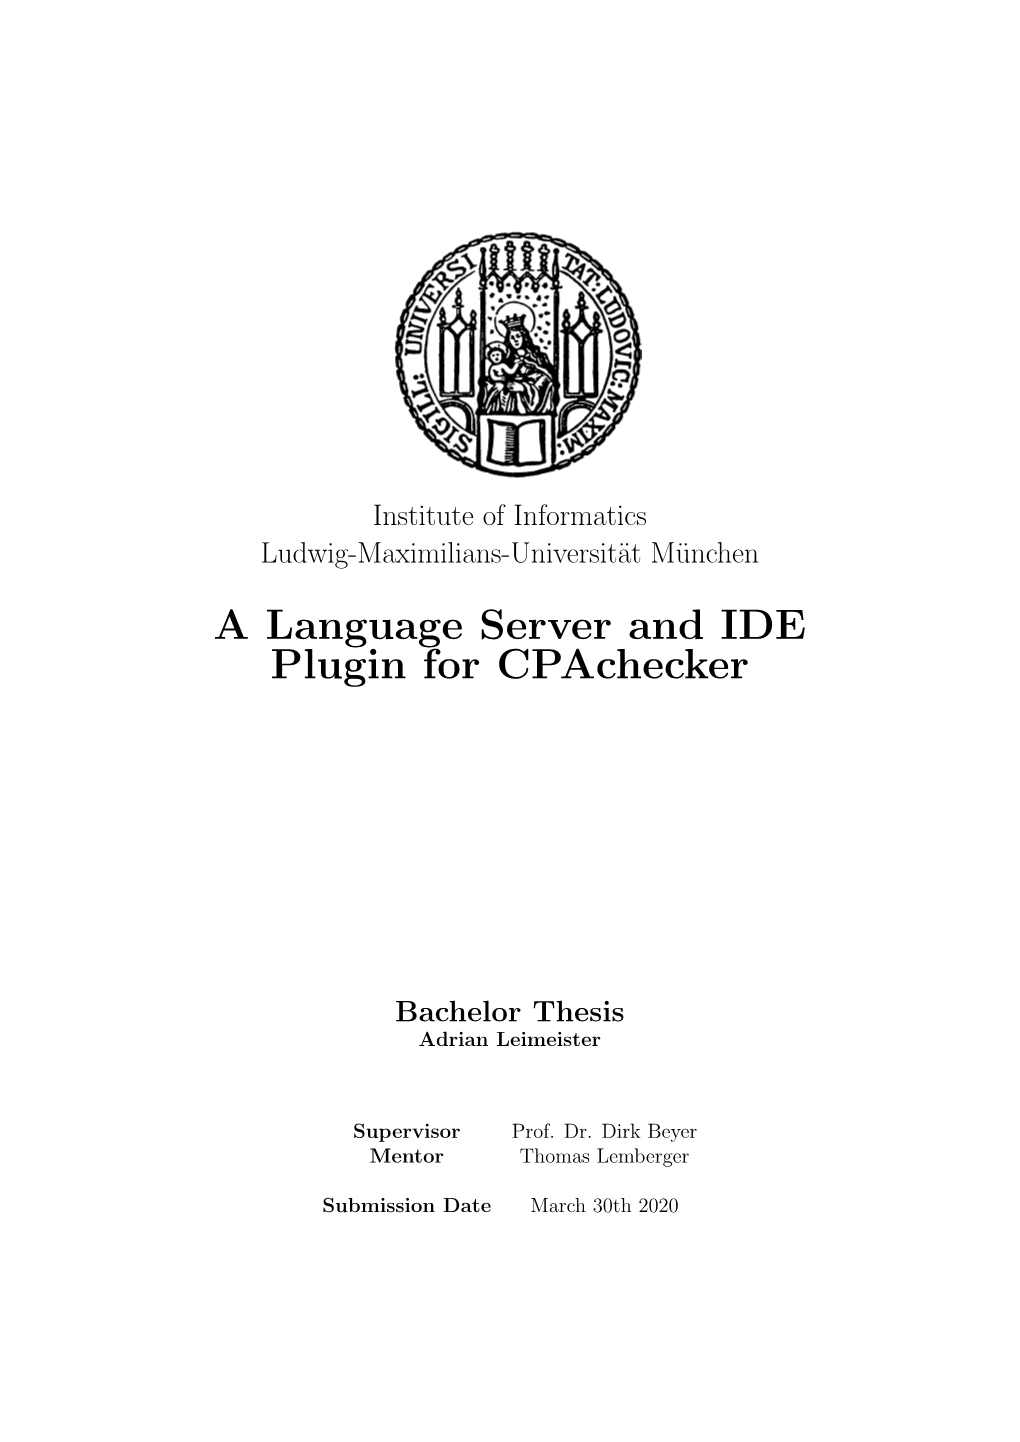 A Language Server and IDE Plugin for Cpachecker